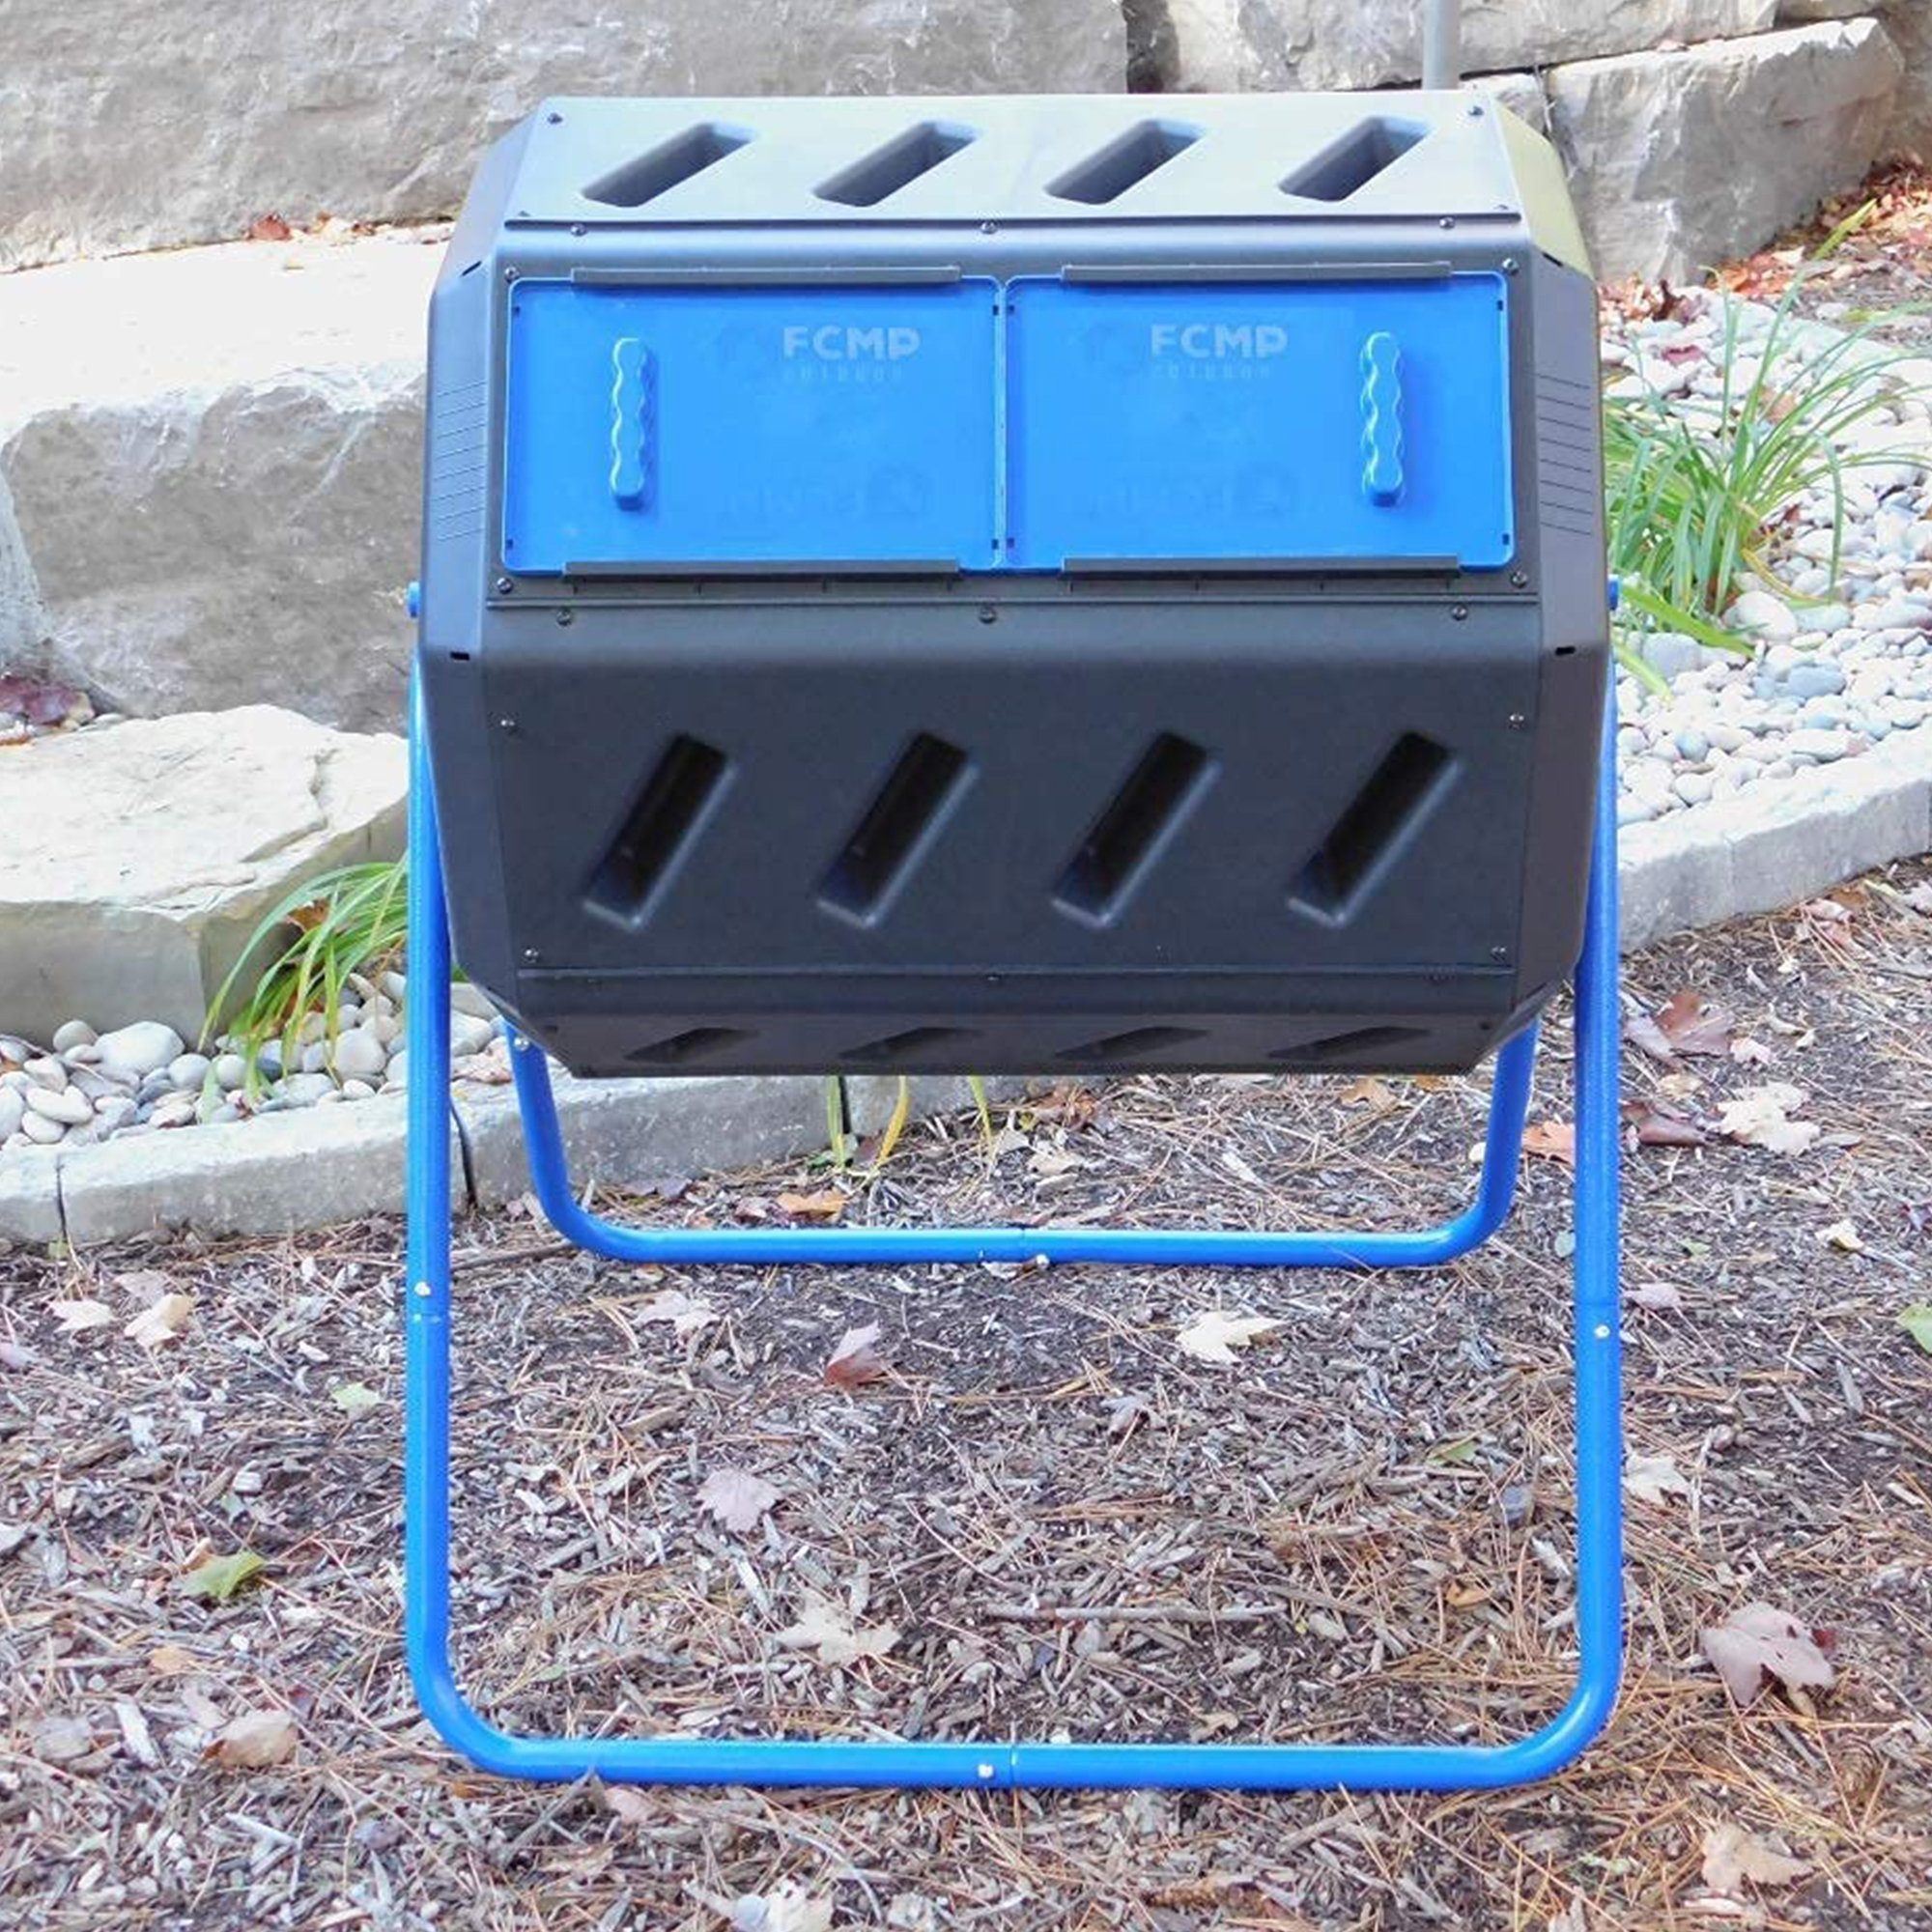 115 Gallon Garden Compost Bin - Outdoor Compost Tumblers